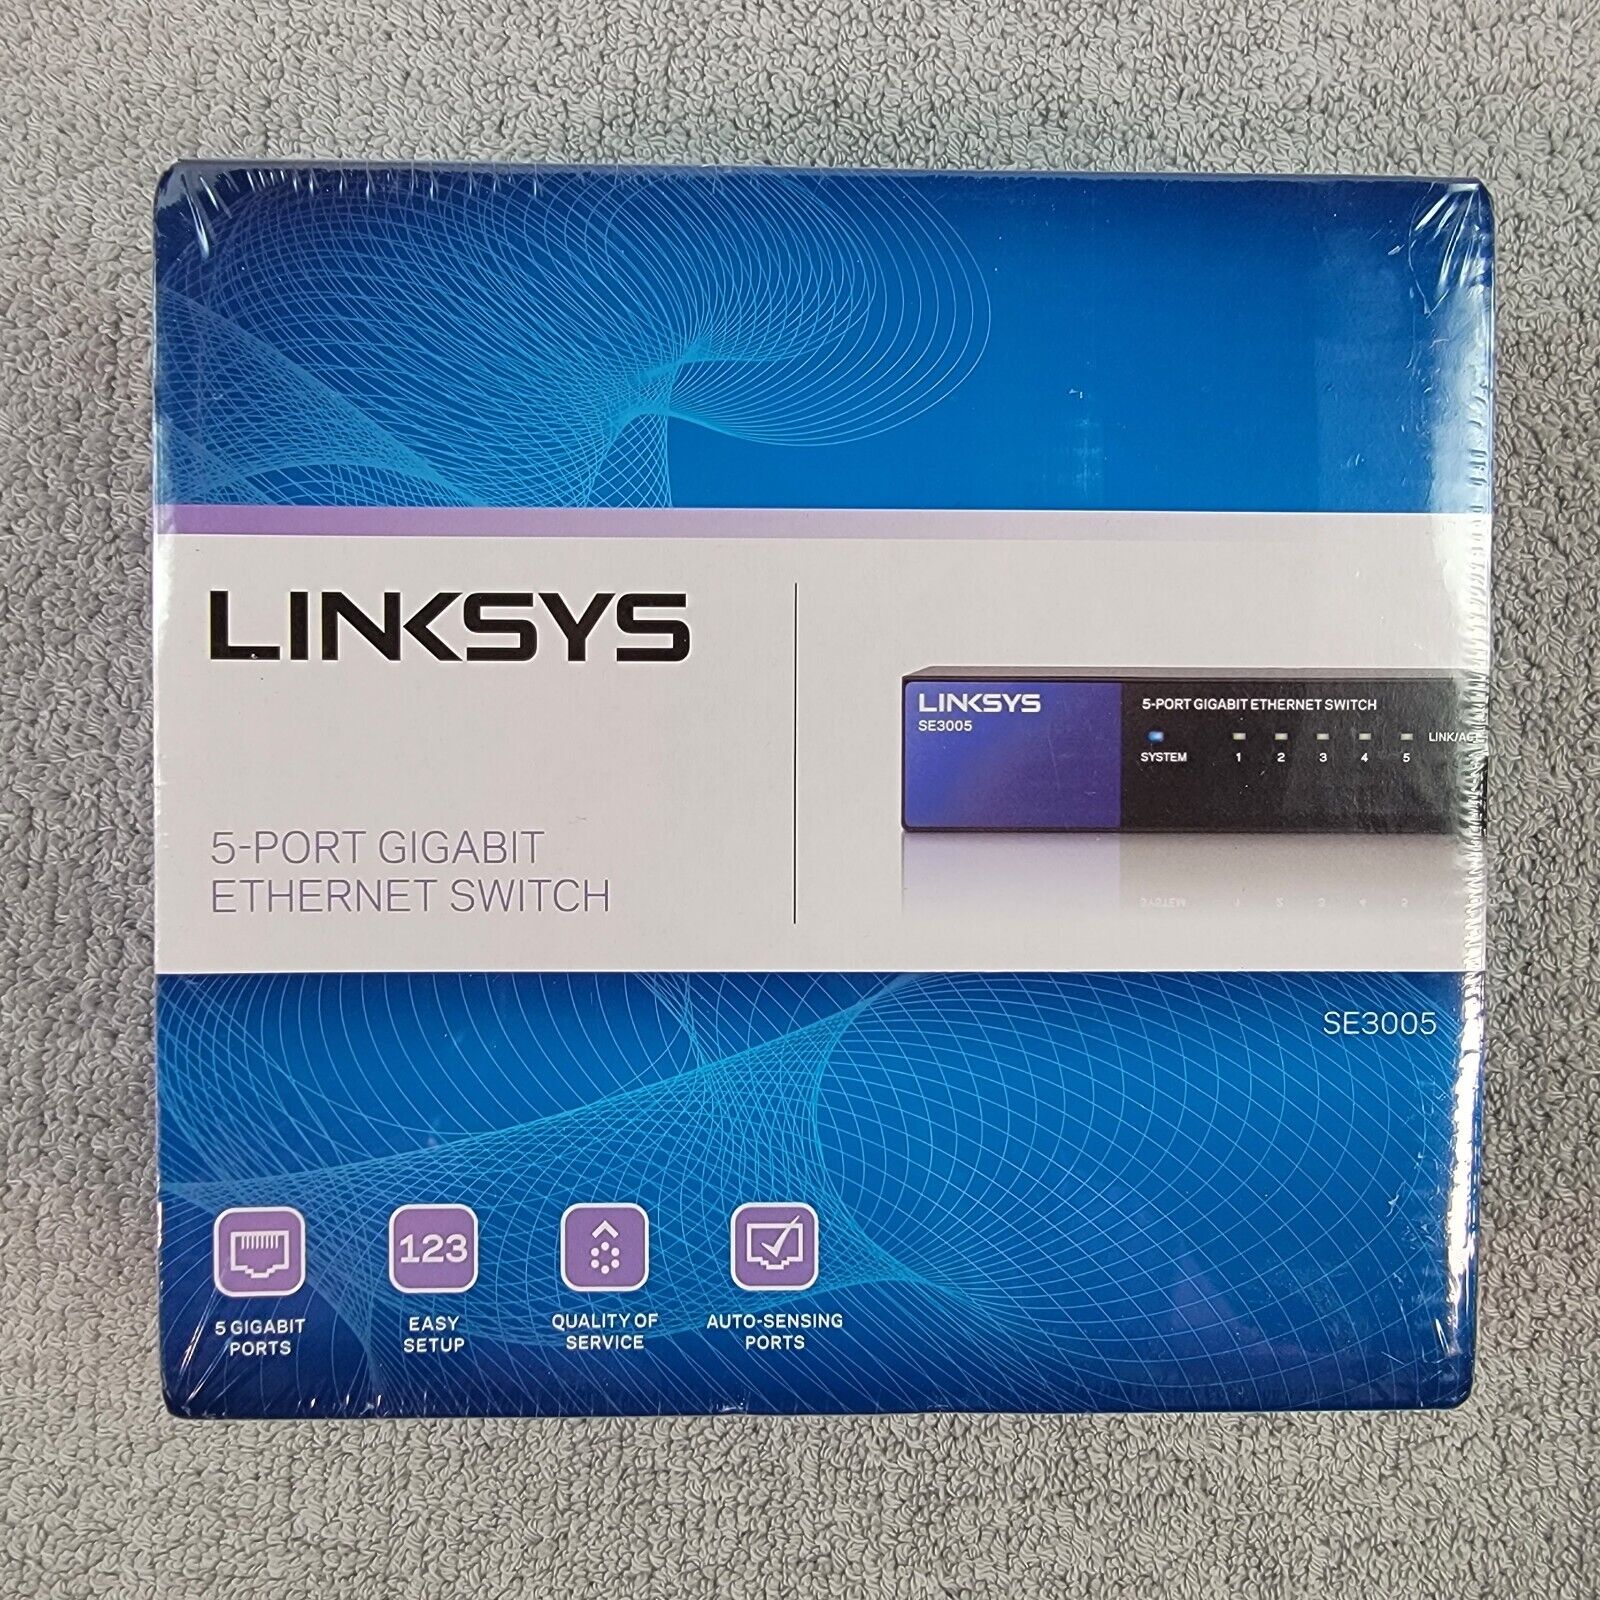 Linksys SE3005 5-port Gigabit Ethernet Switch NIB